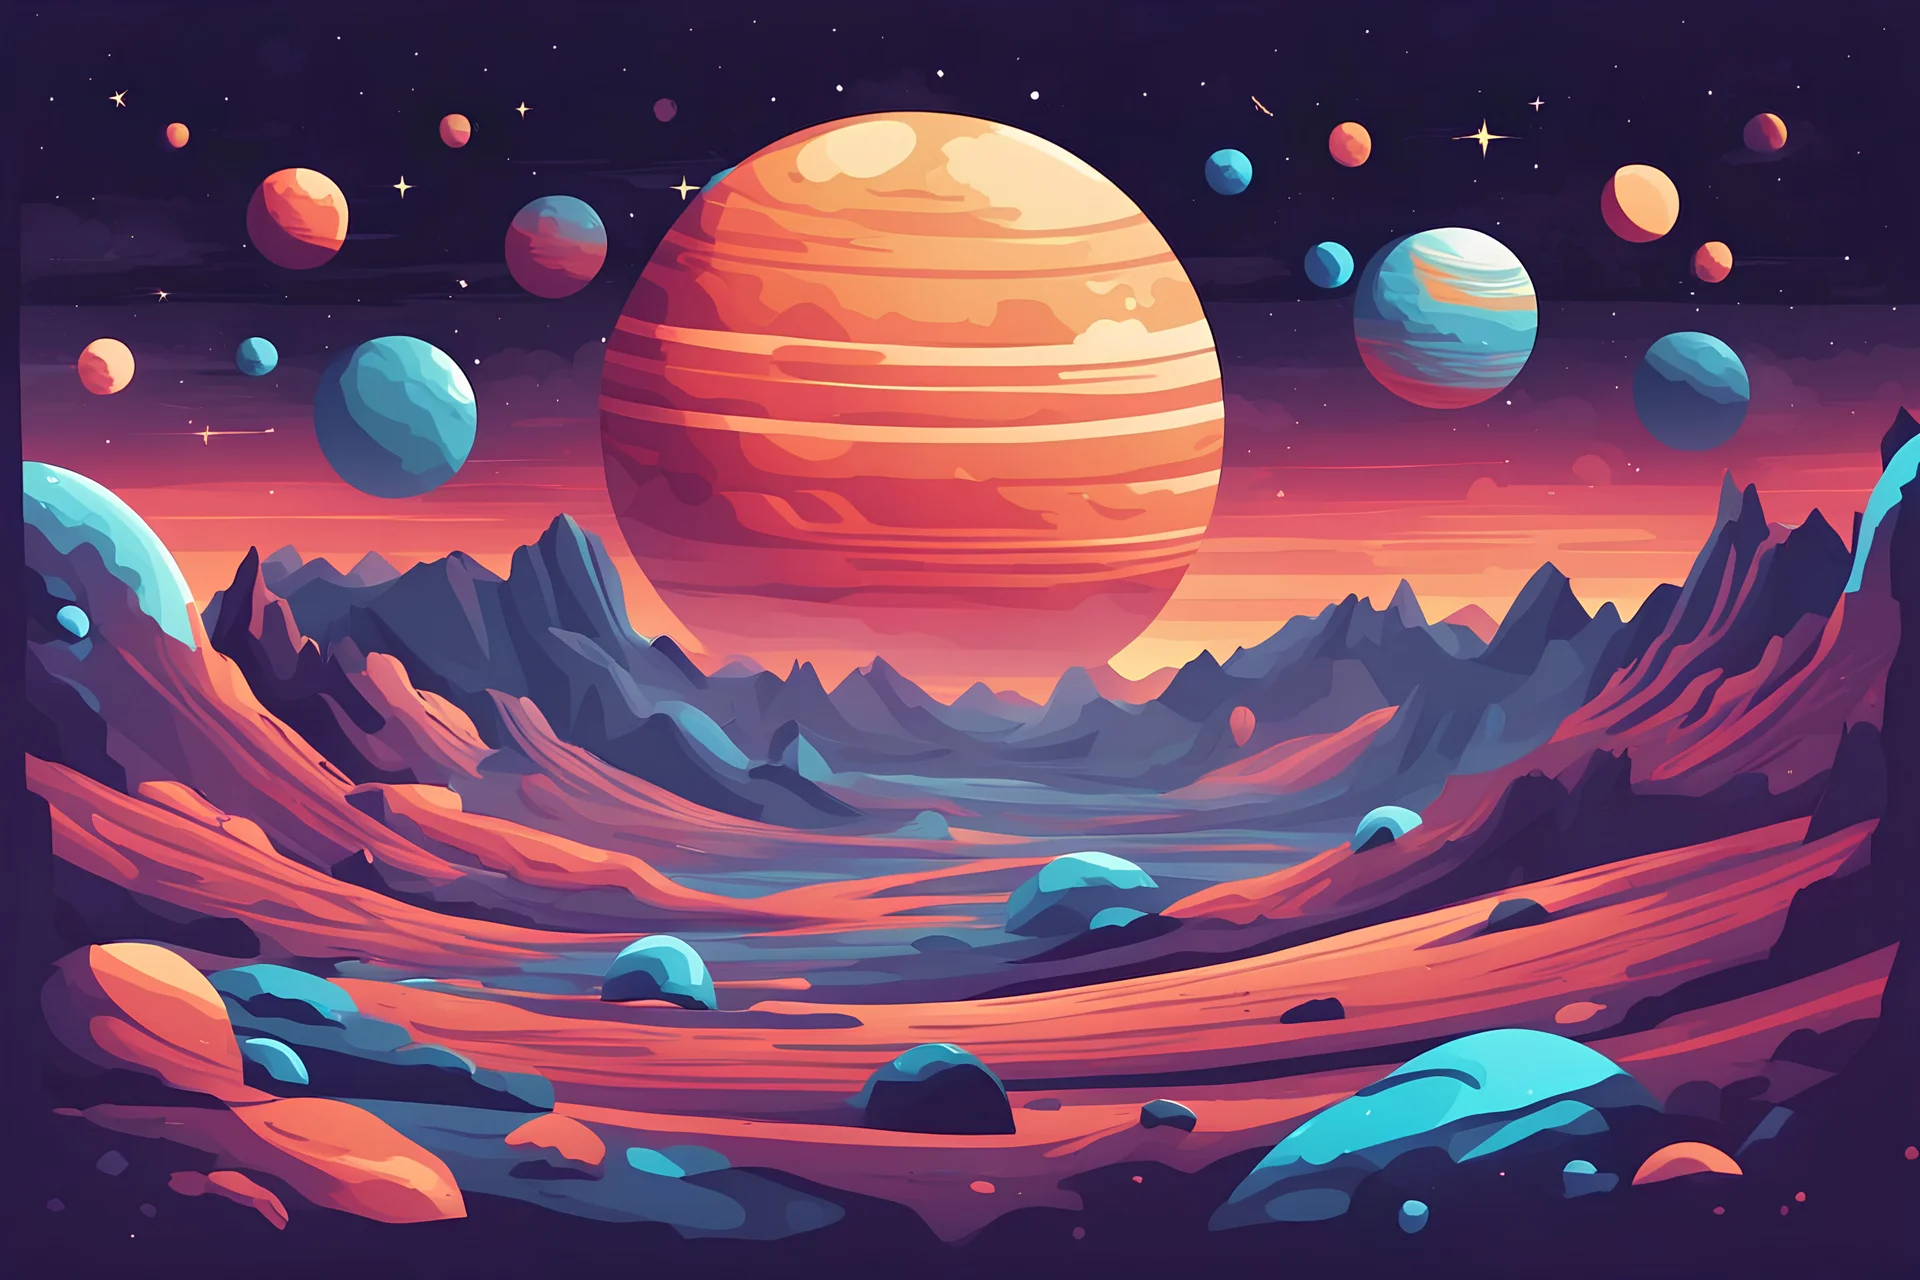 Cosmic planet landscape or surface background flat vector illustration.